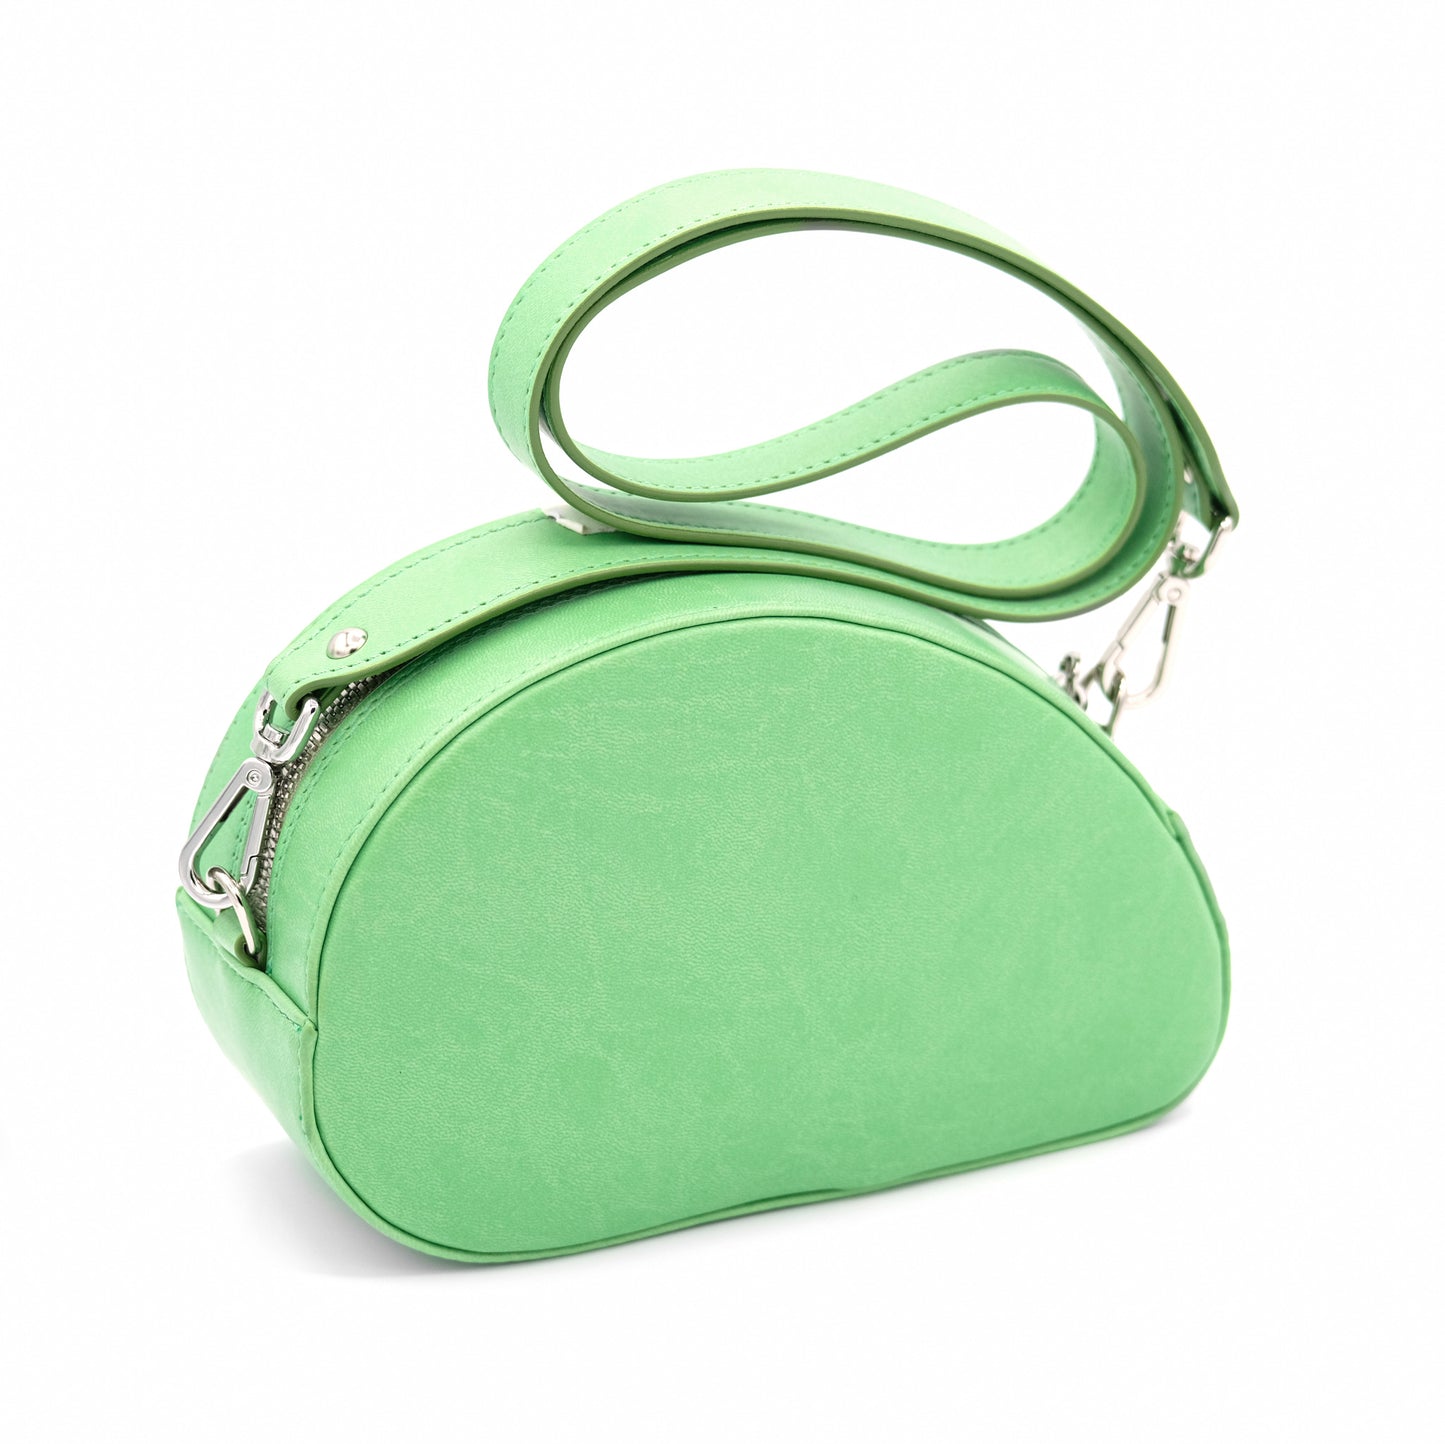 AMA Medium bag green with logo plate